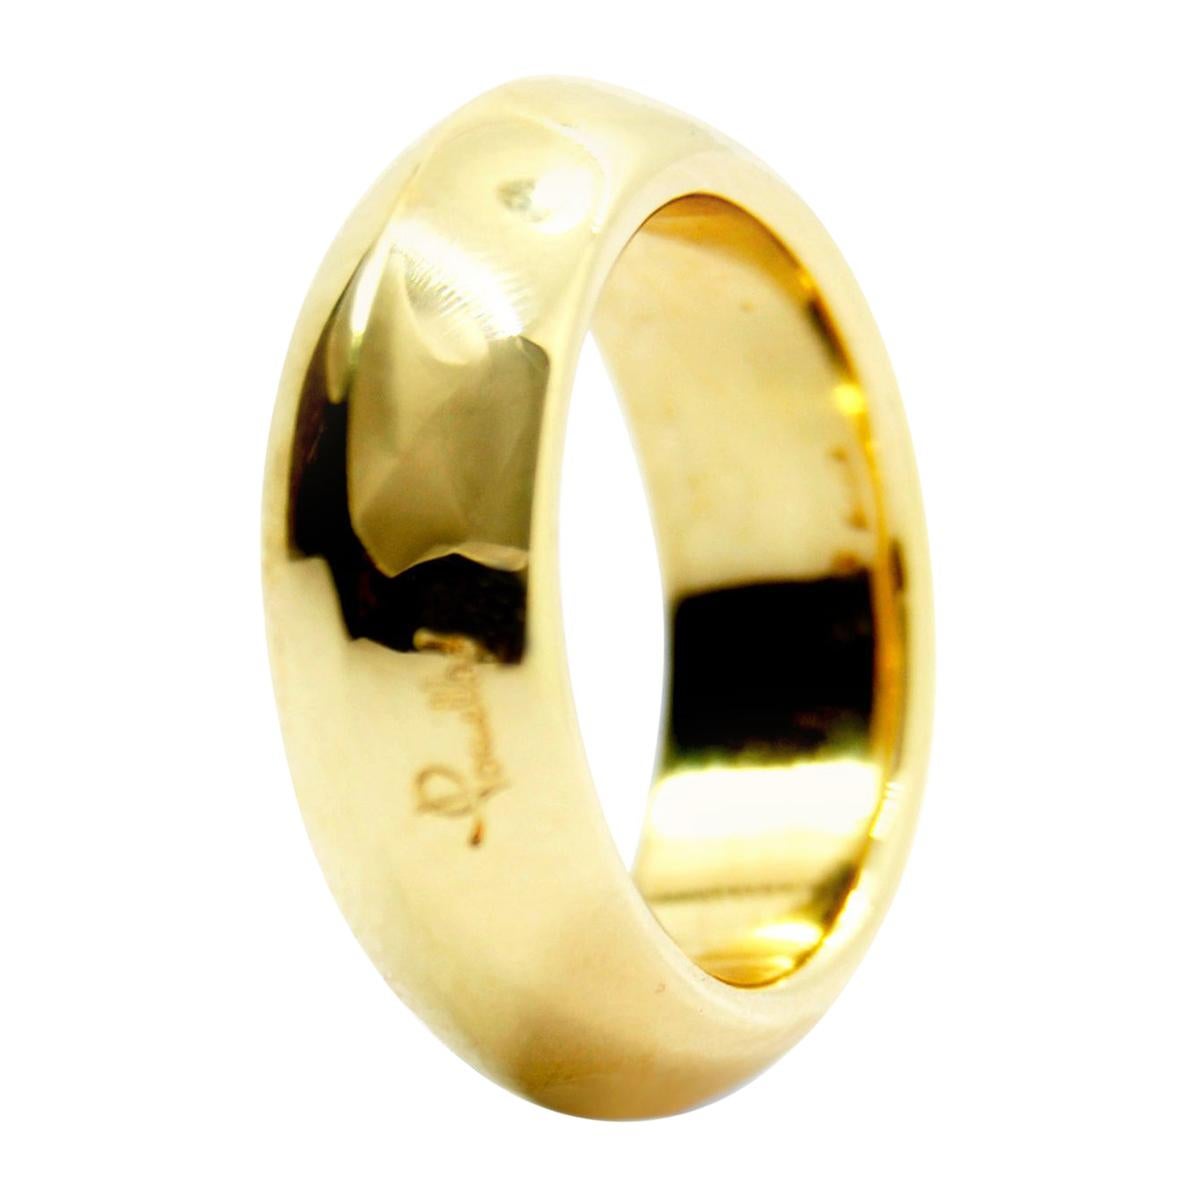 Pomellato 18 Karat Yellow Gold Solid Ring Iconic and Classic Pomellato